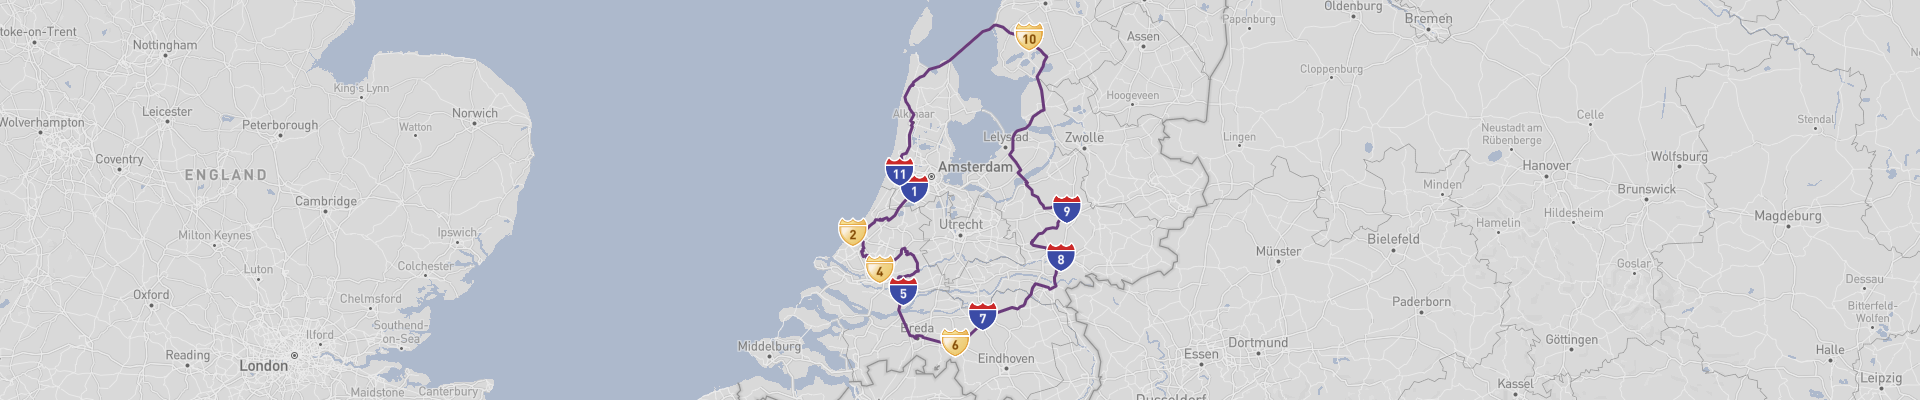 Nederland Road Trip